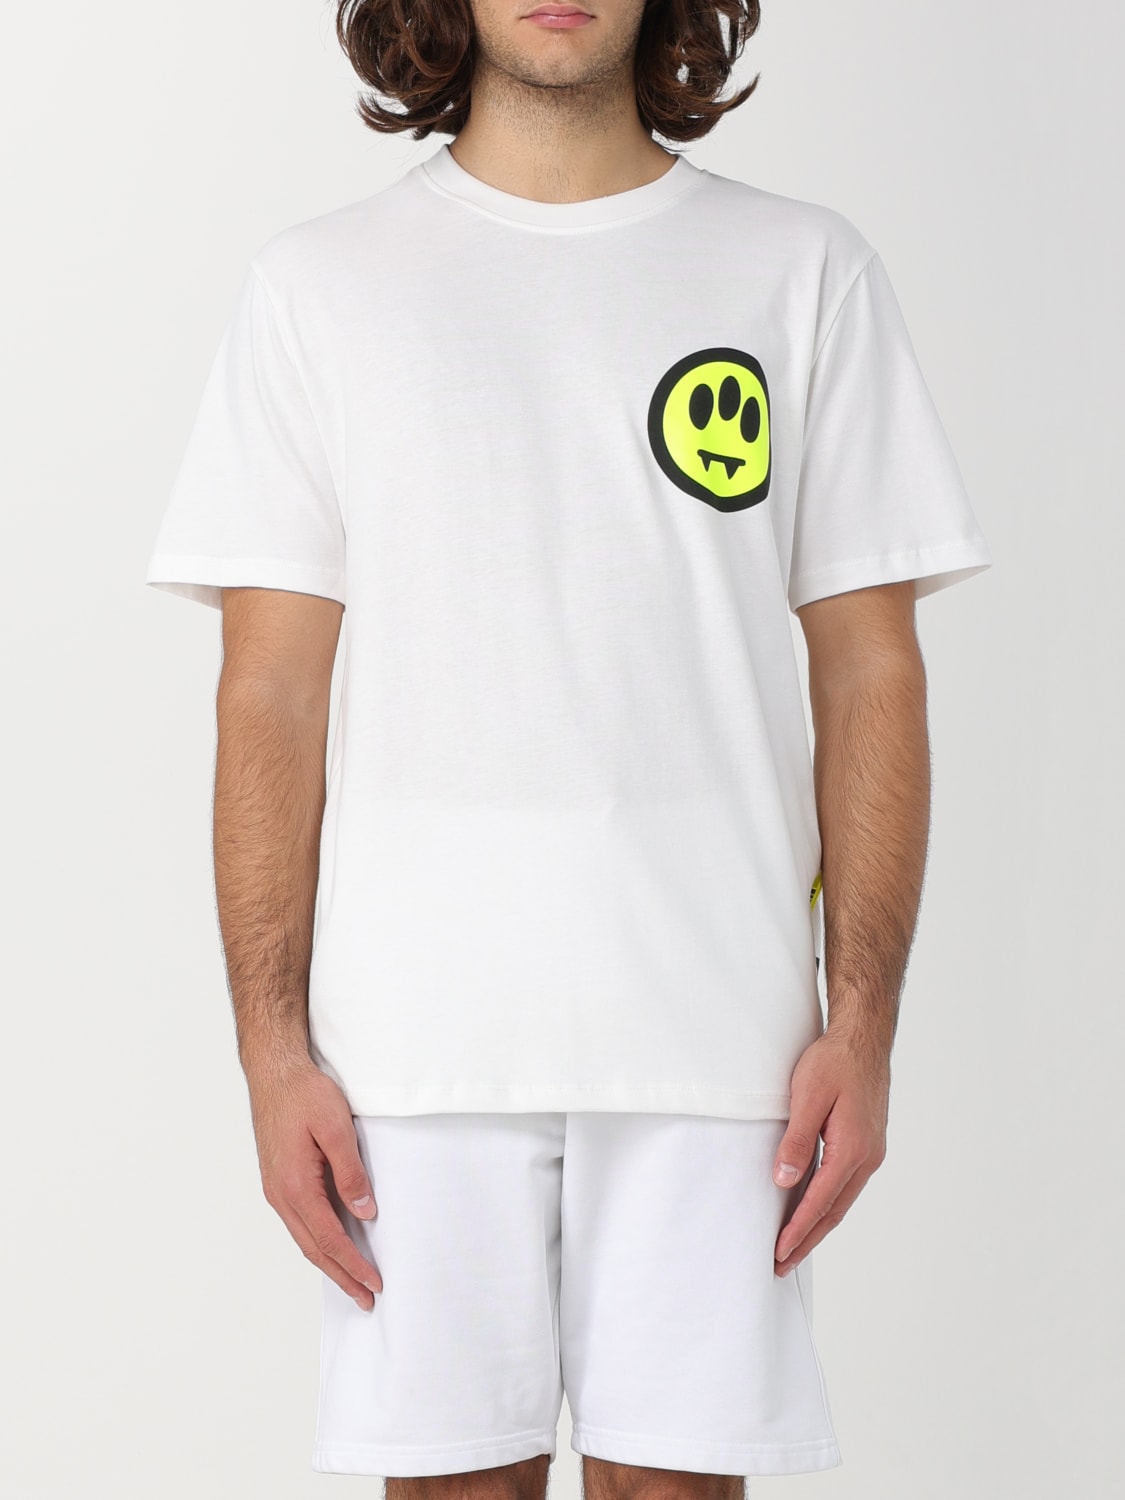 BARROW T-SHIRT: T-shirt con stampa logo | T-Shirt Barrow uomo ...